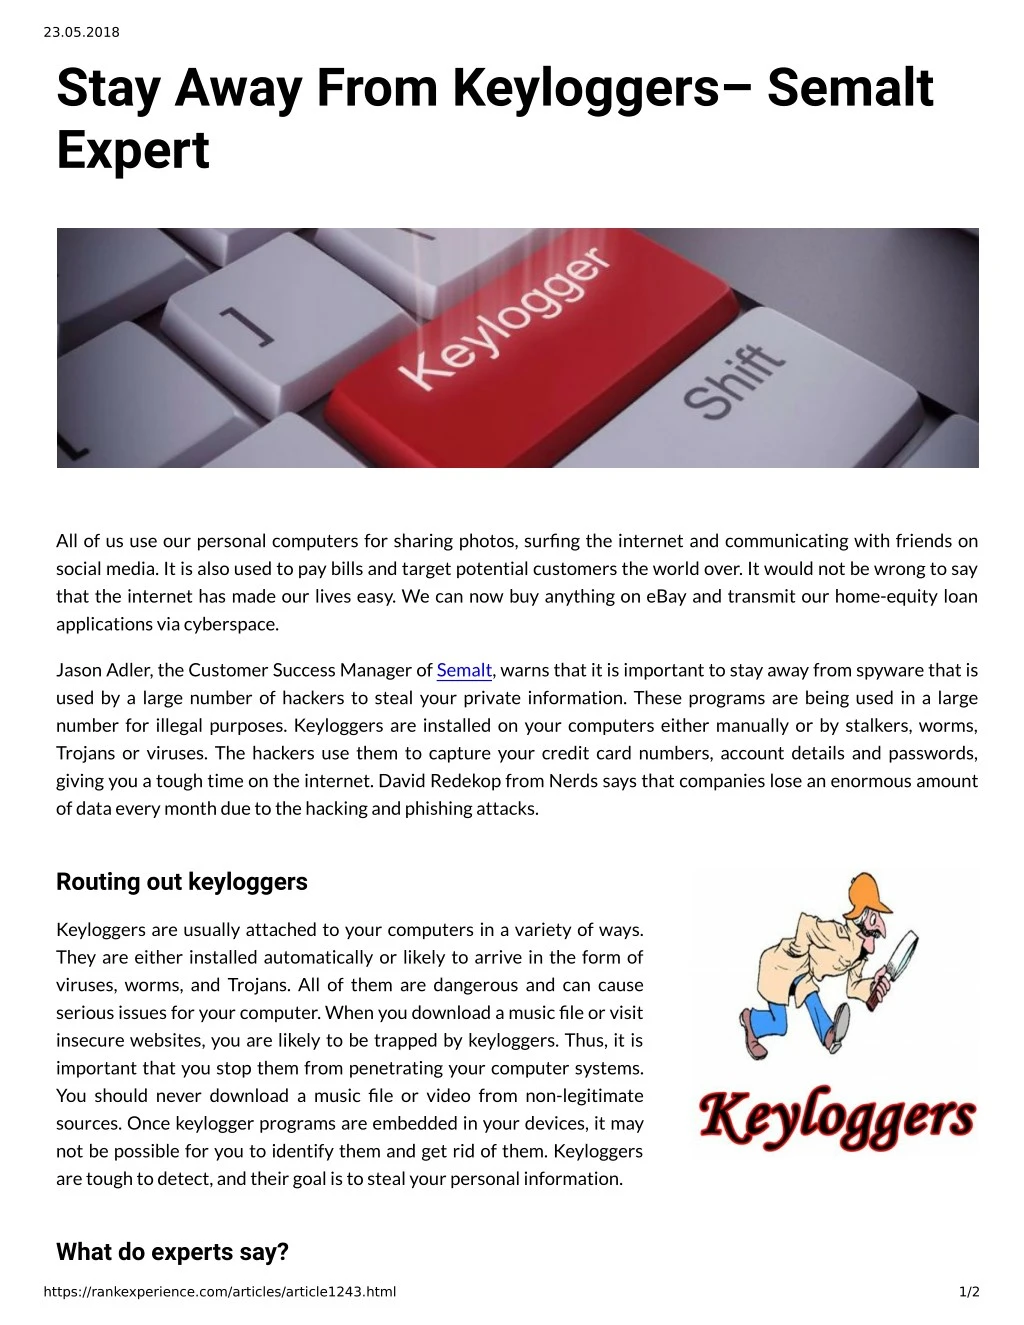 23 05 2018 stay away from keyloggers semalt expert